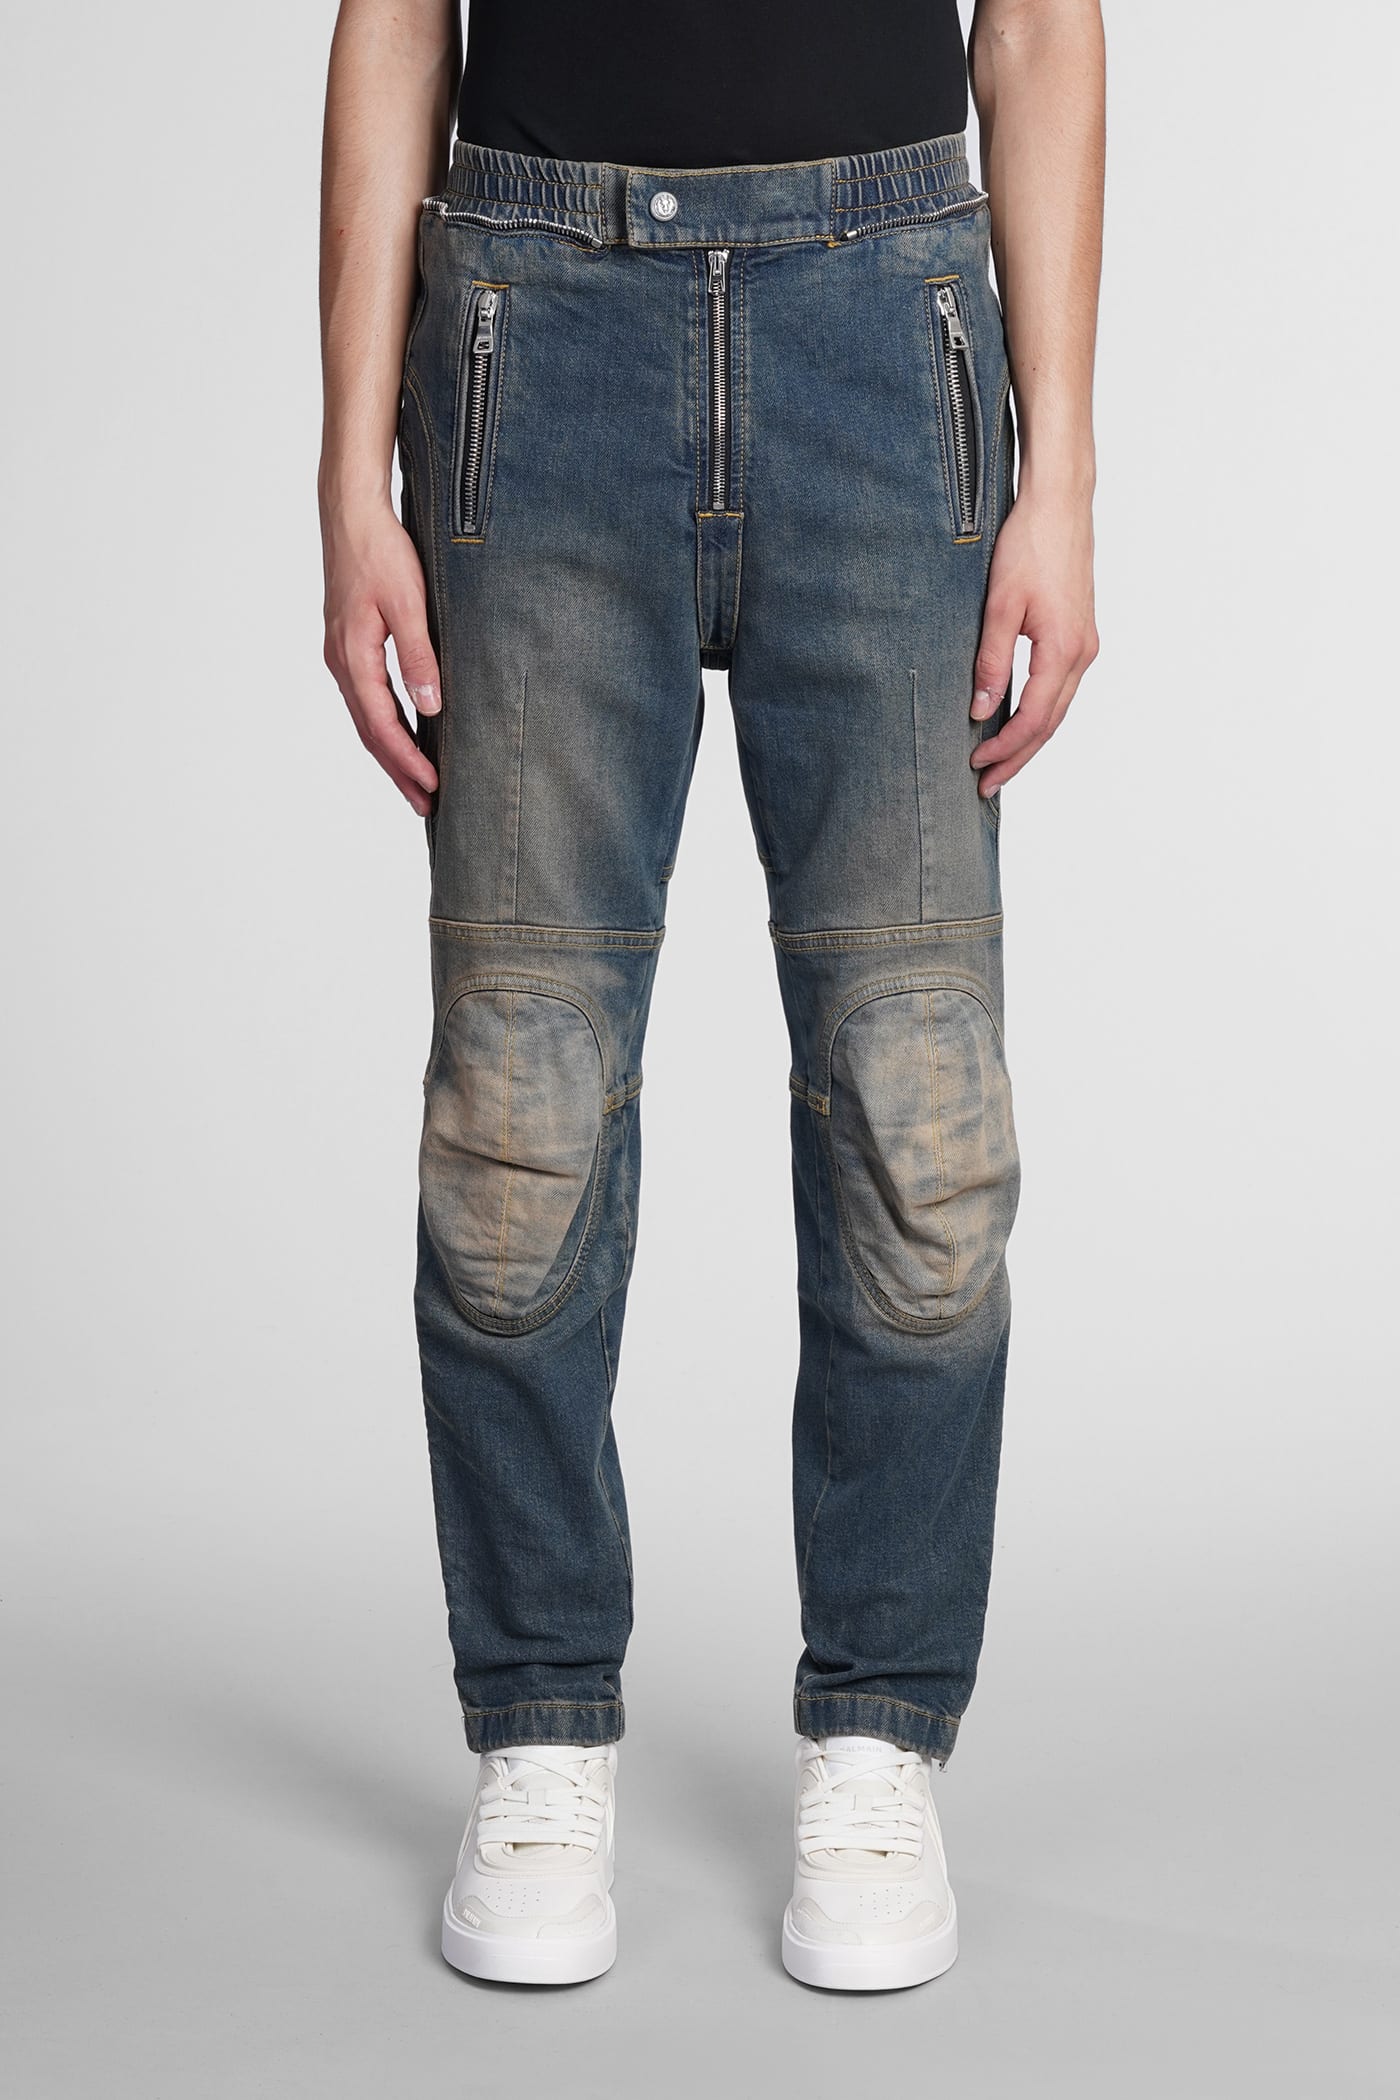 Balmain Jeans In Blue Denim